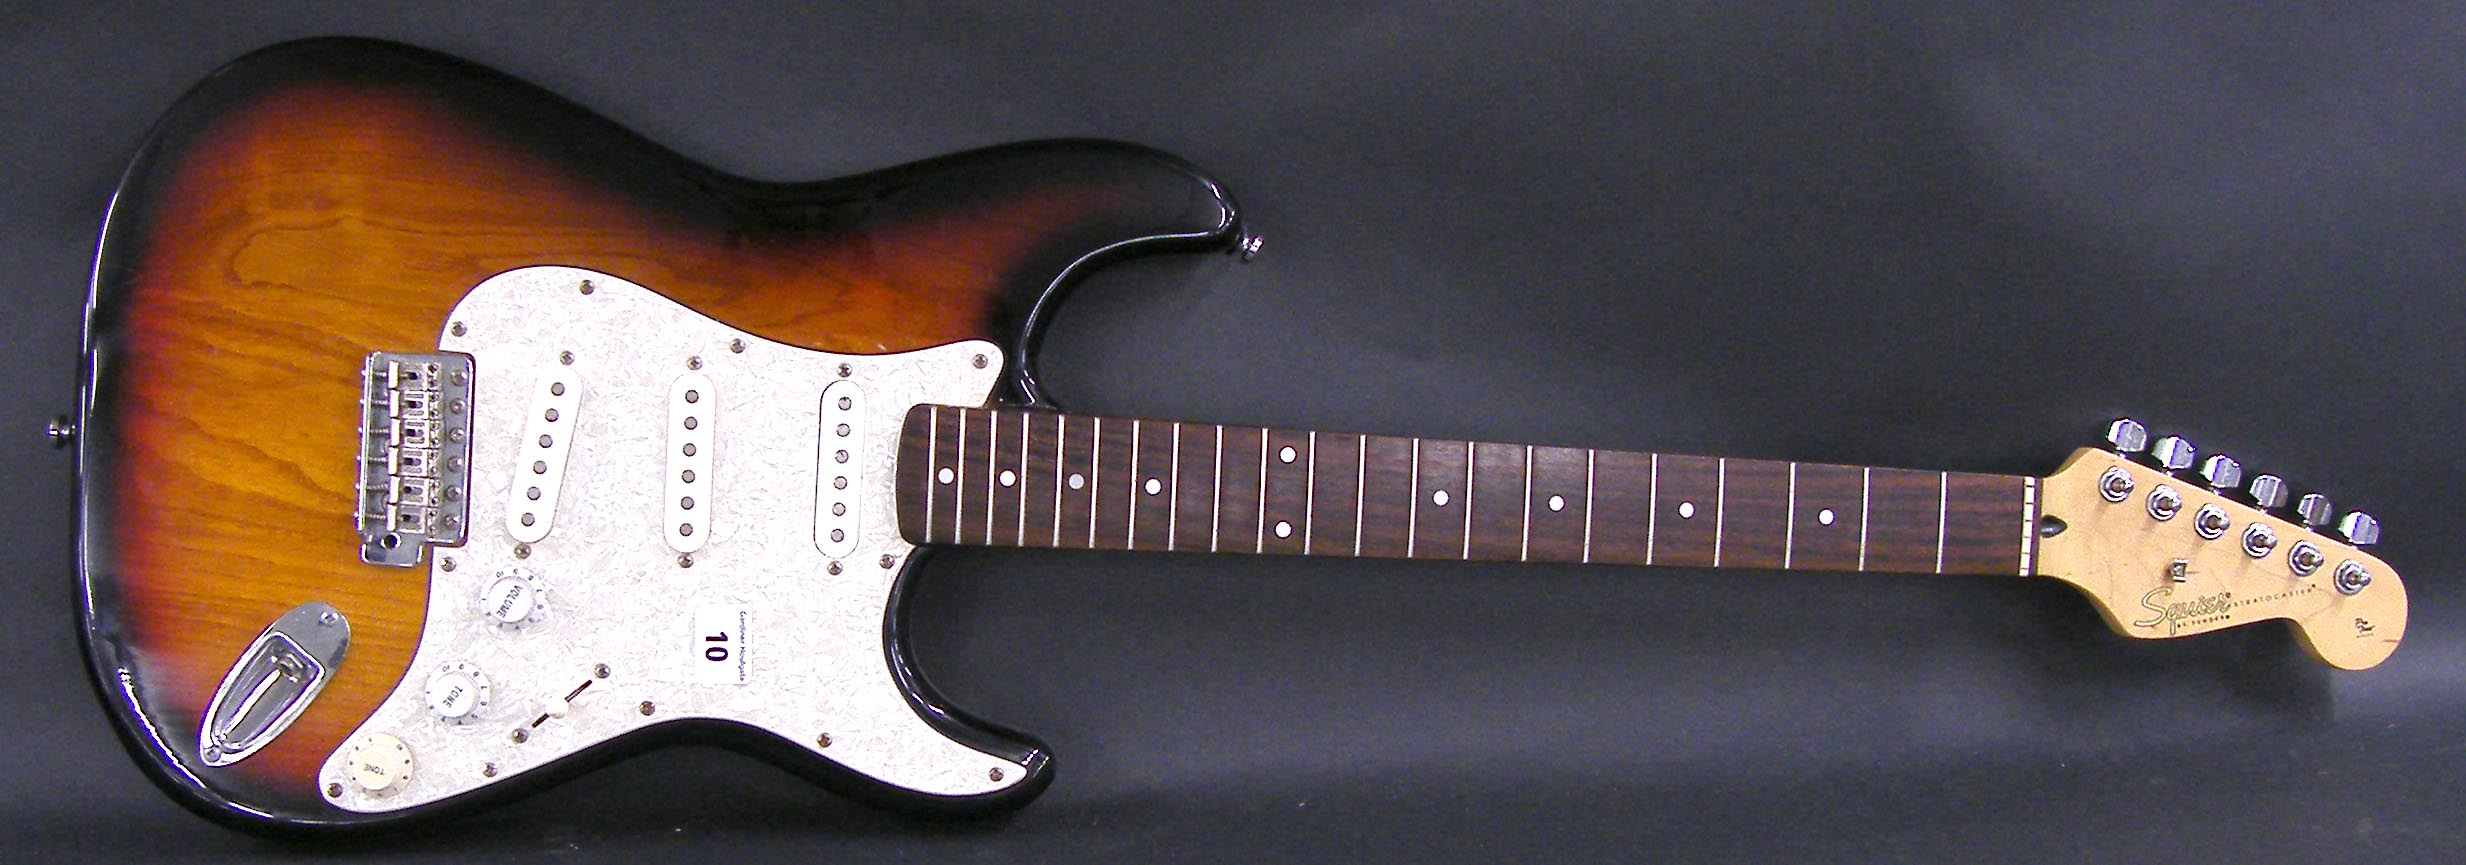 Squier by Fender Pro Tone Series Stratocaster electric guitar, made in Korea, circa 1997, ser. no.